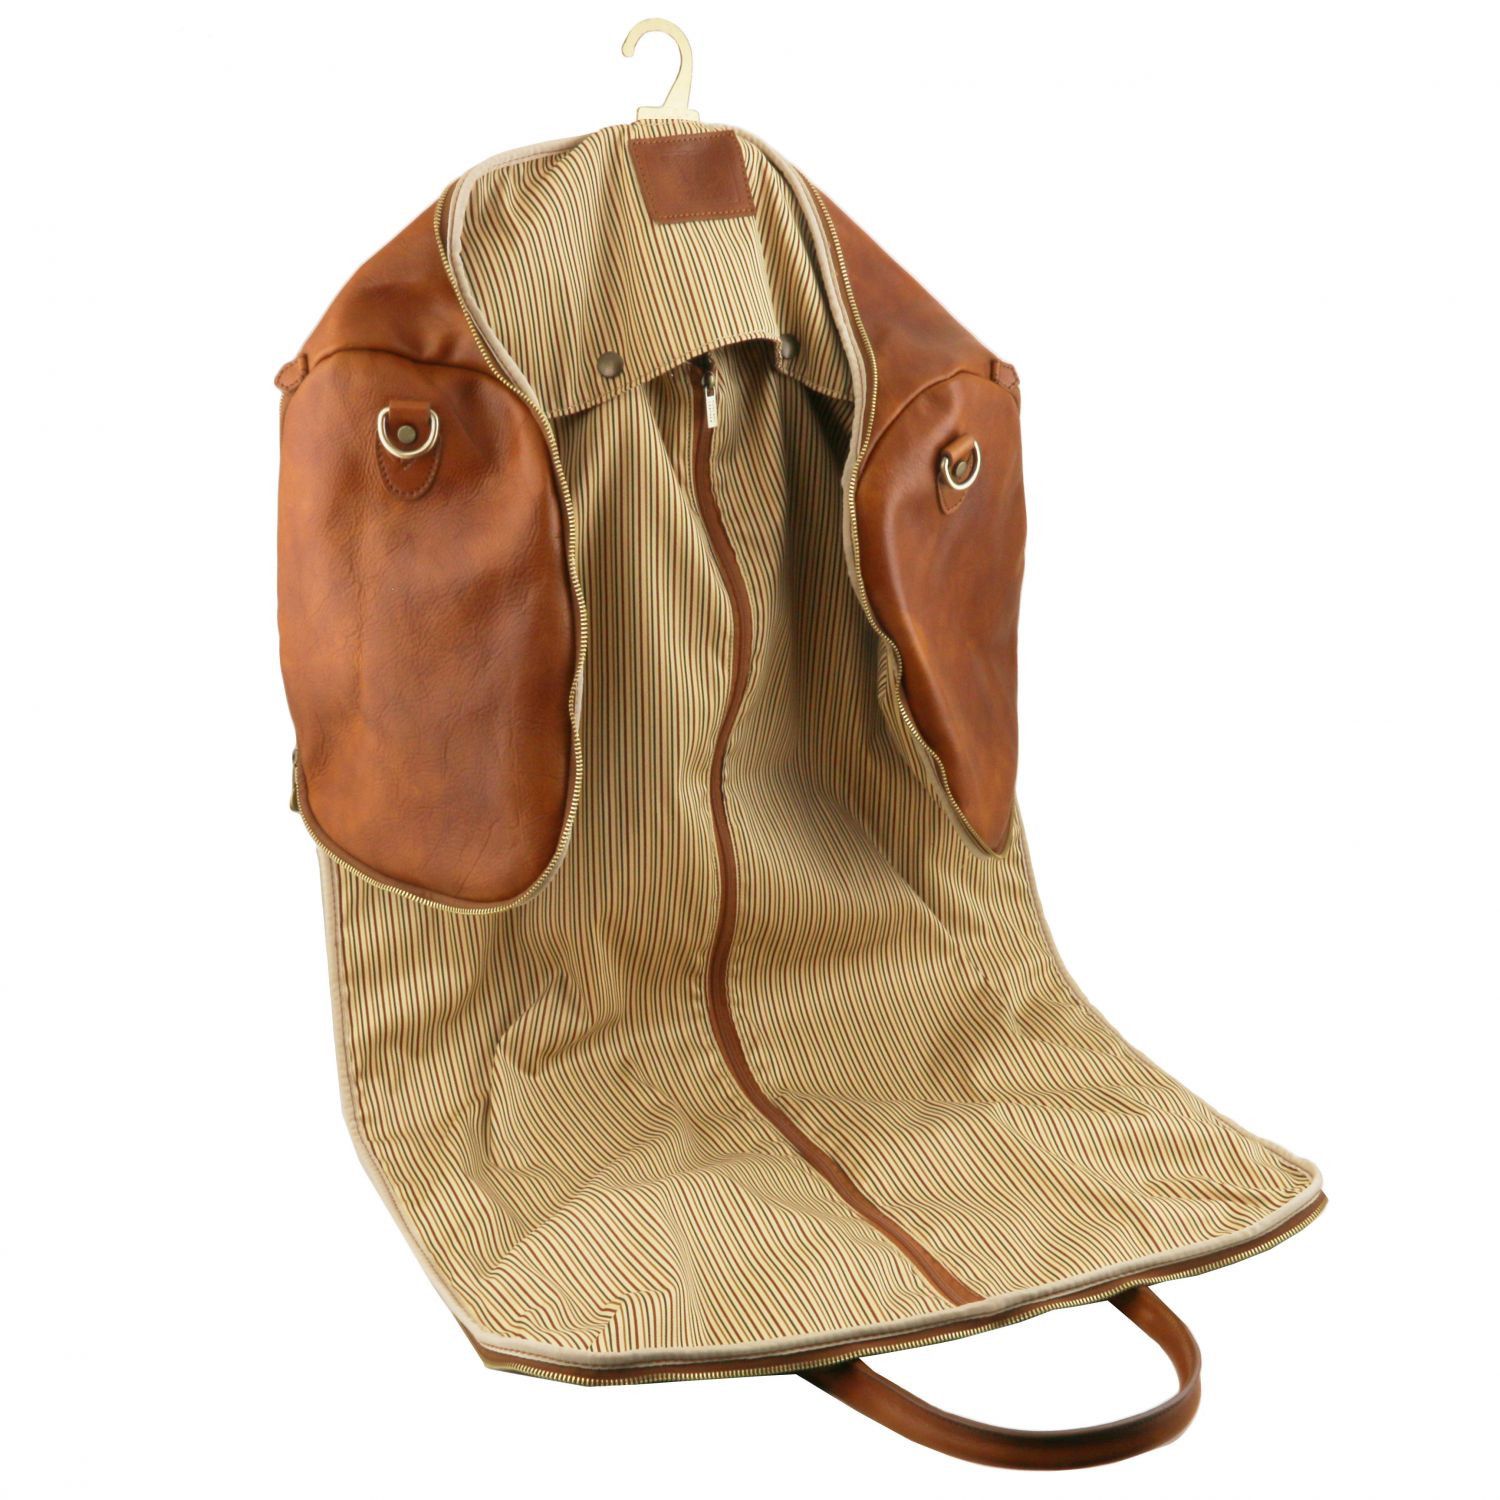 Leather Garment Duffle Bag